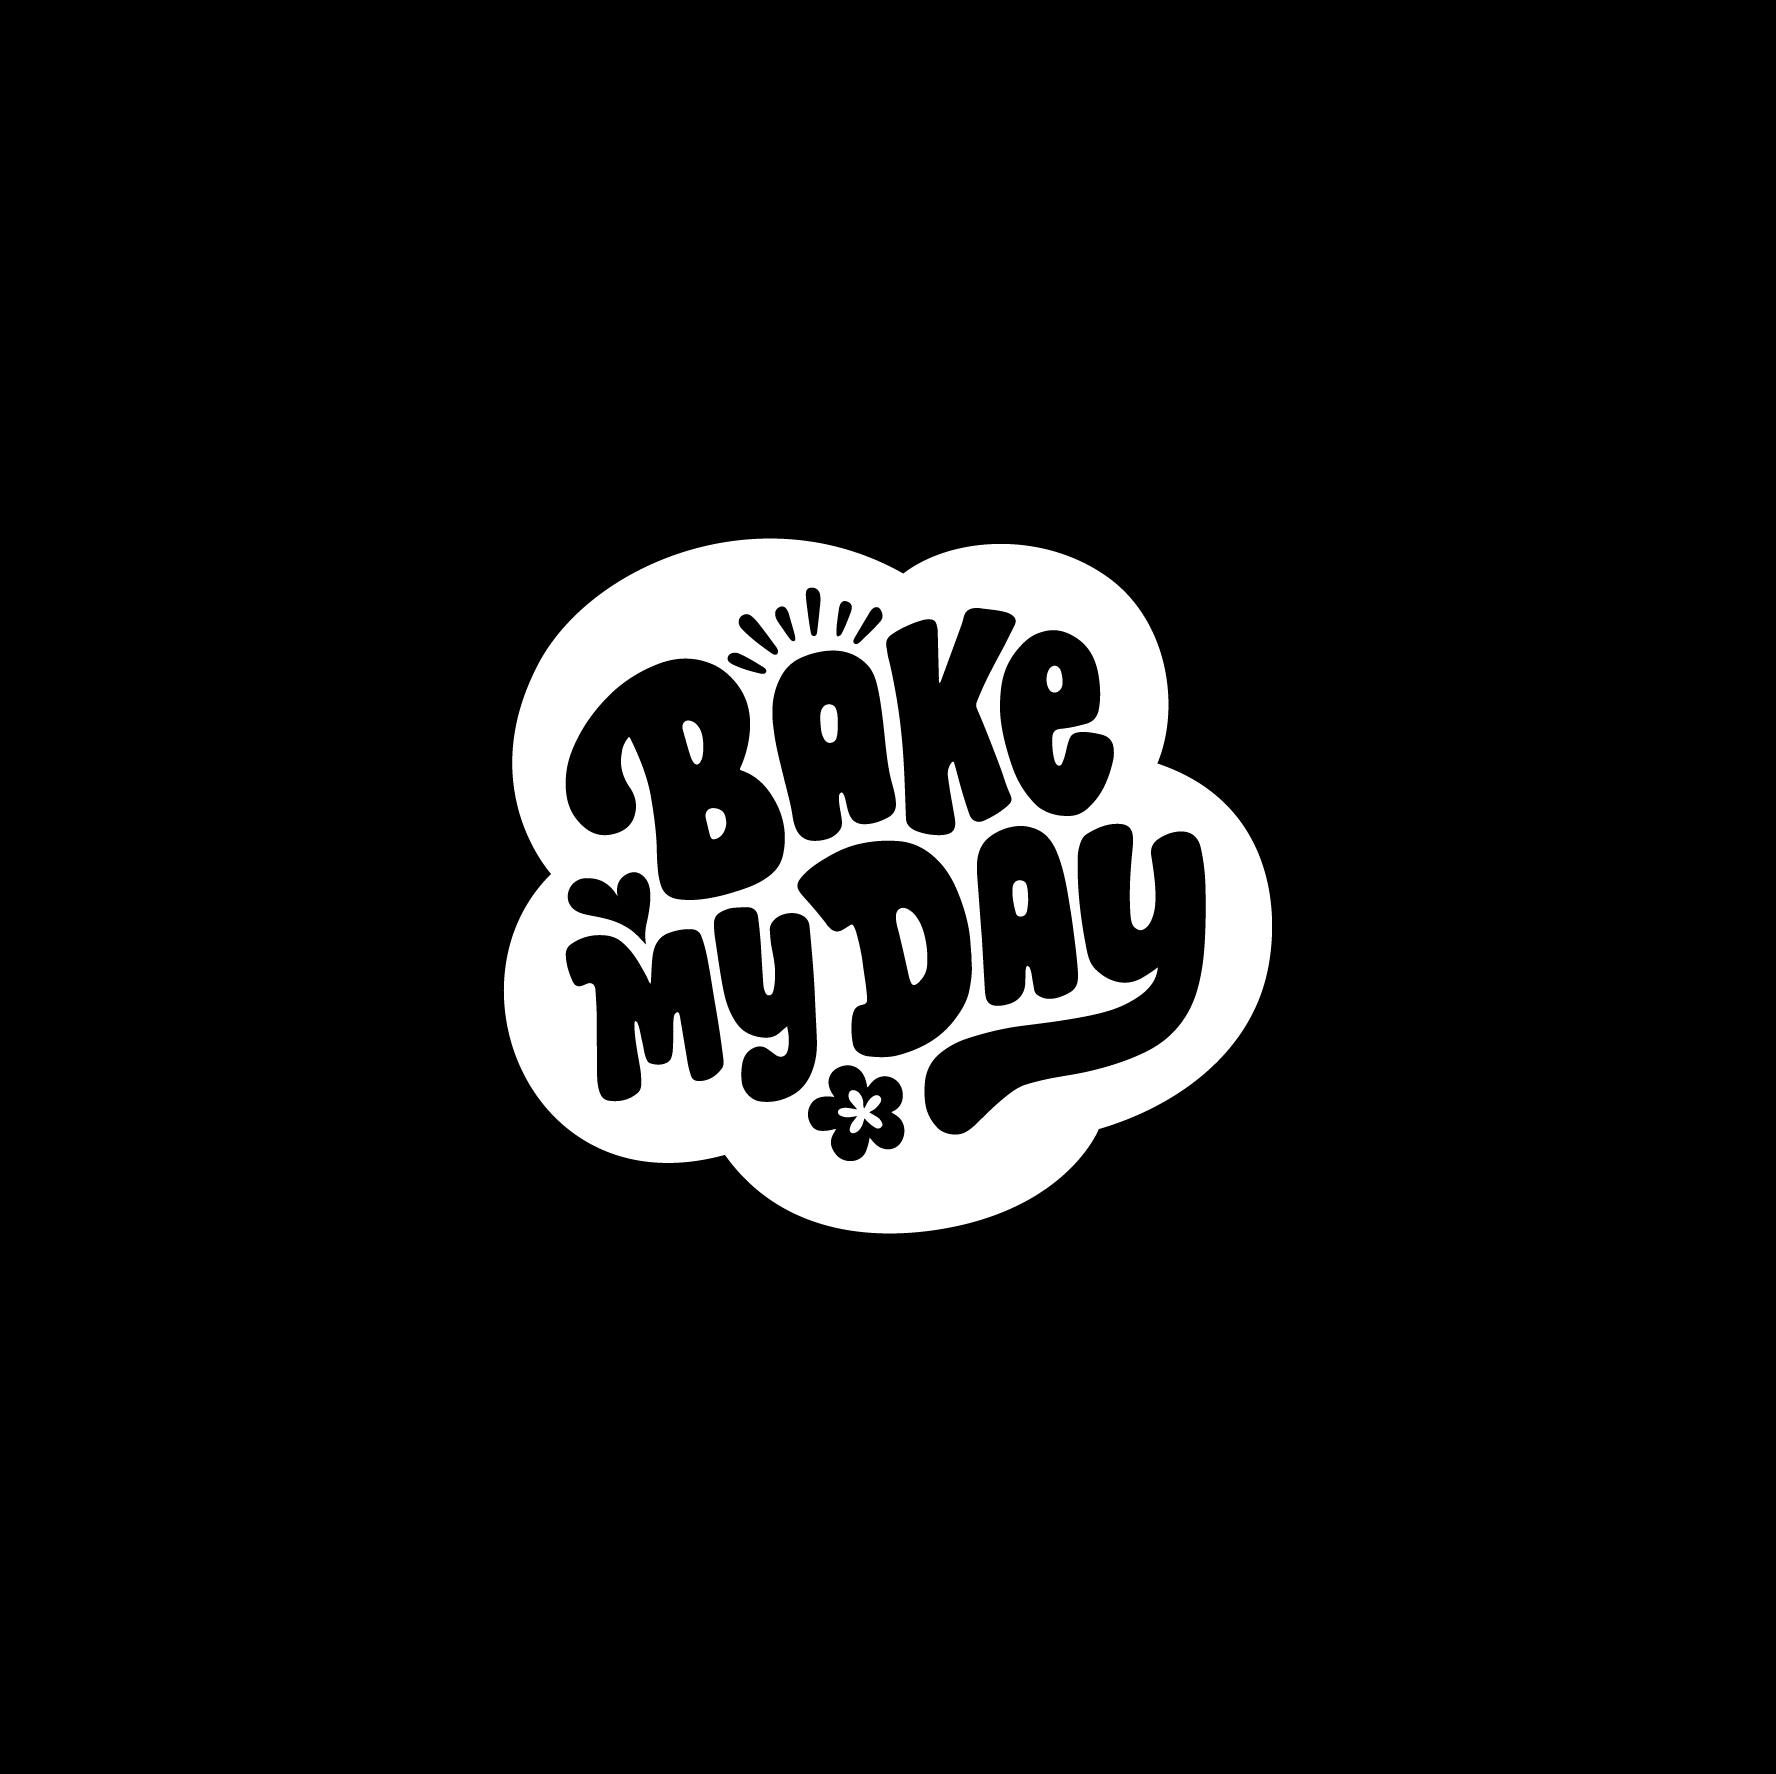 logo for bake my day